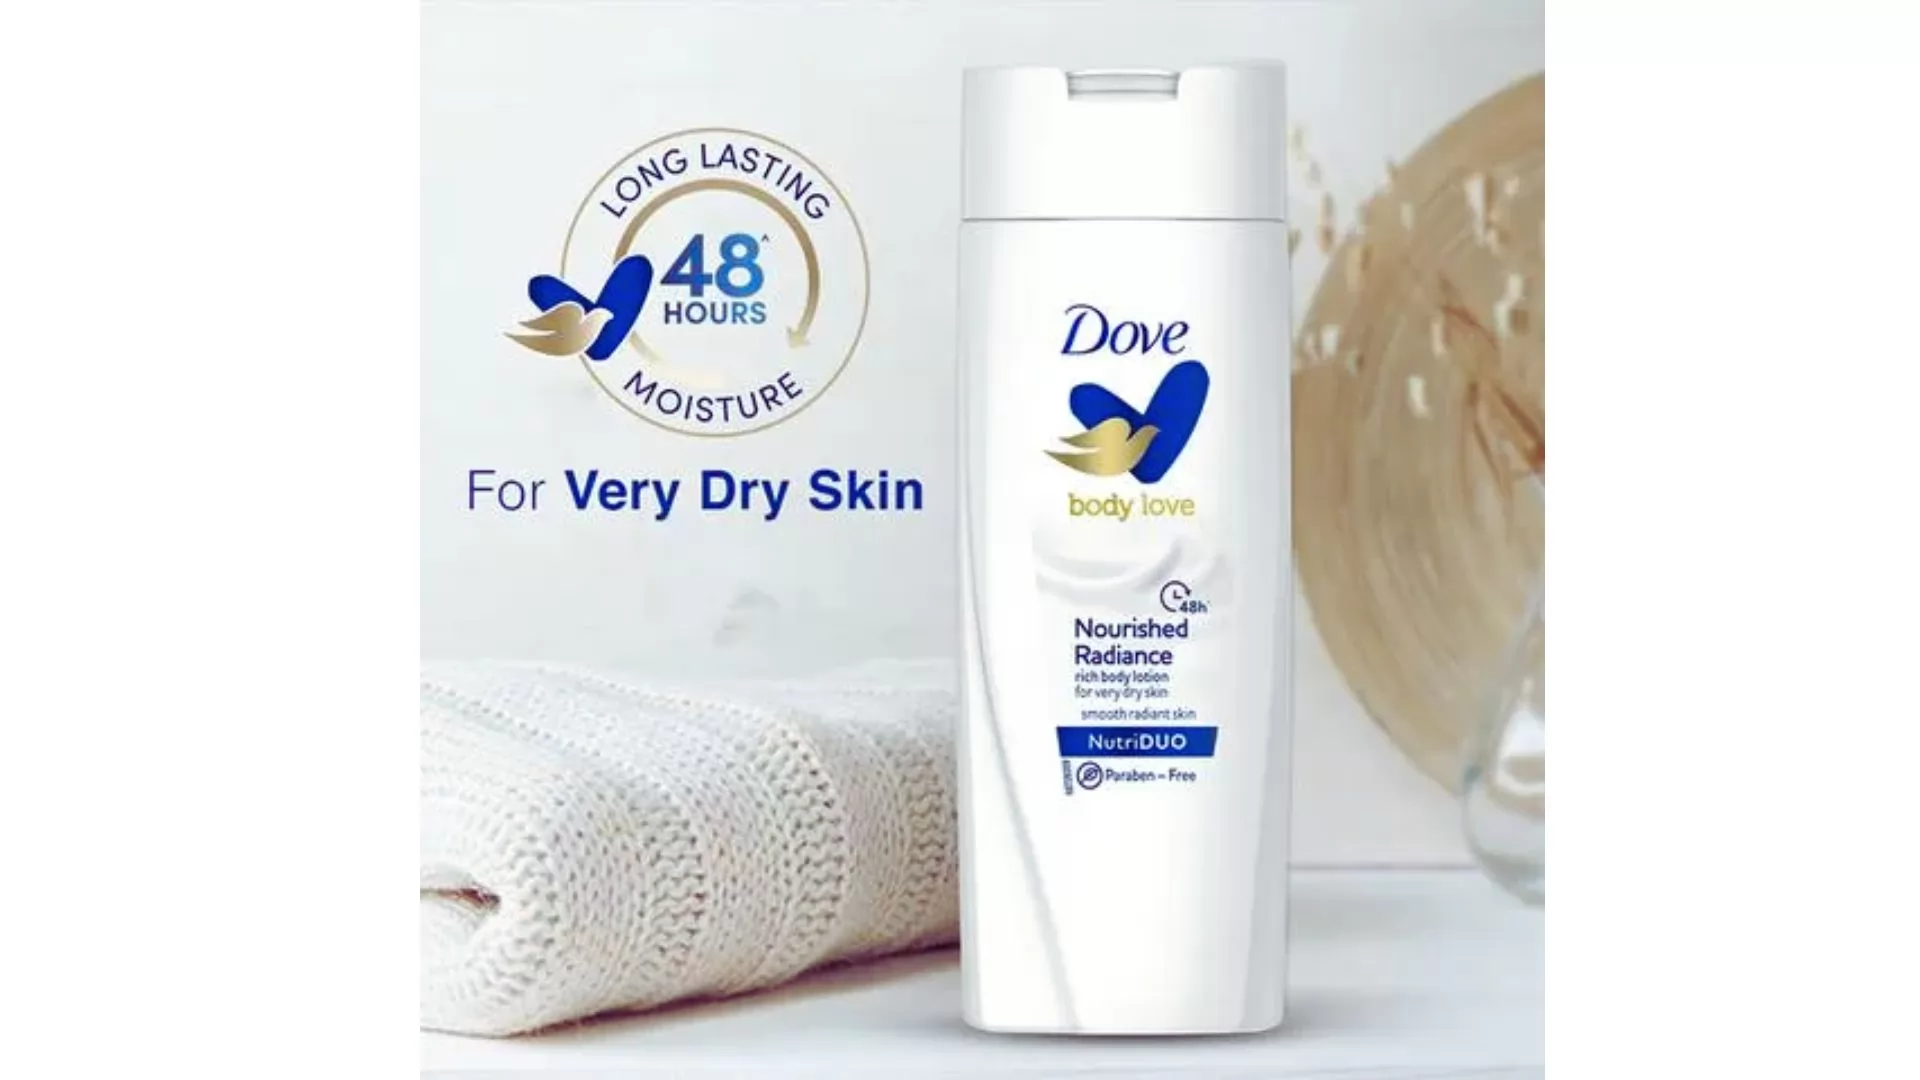 Dove - Nourished Radiance body lotion